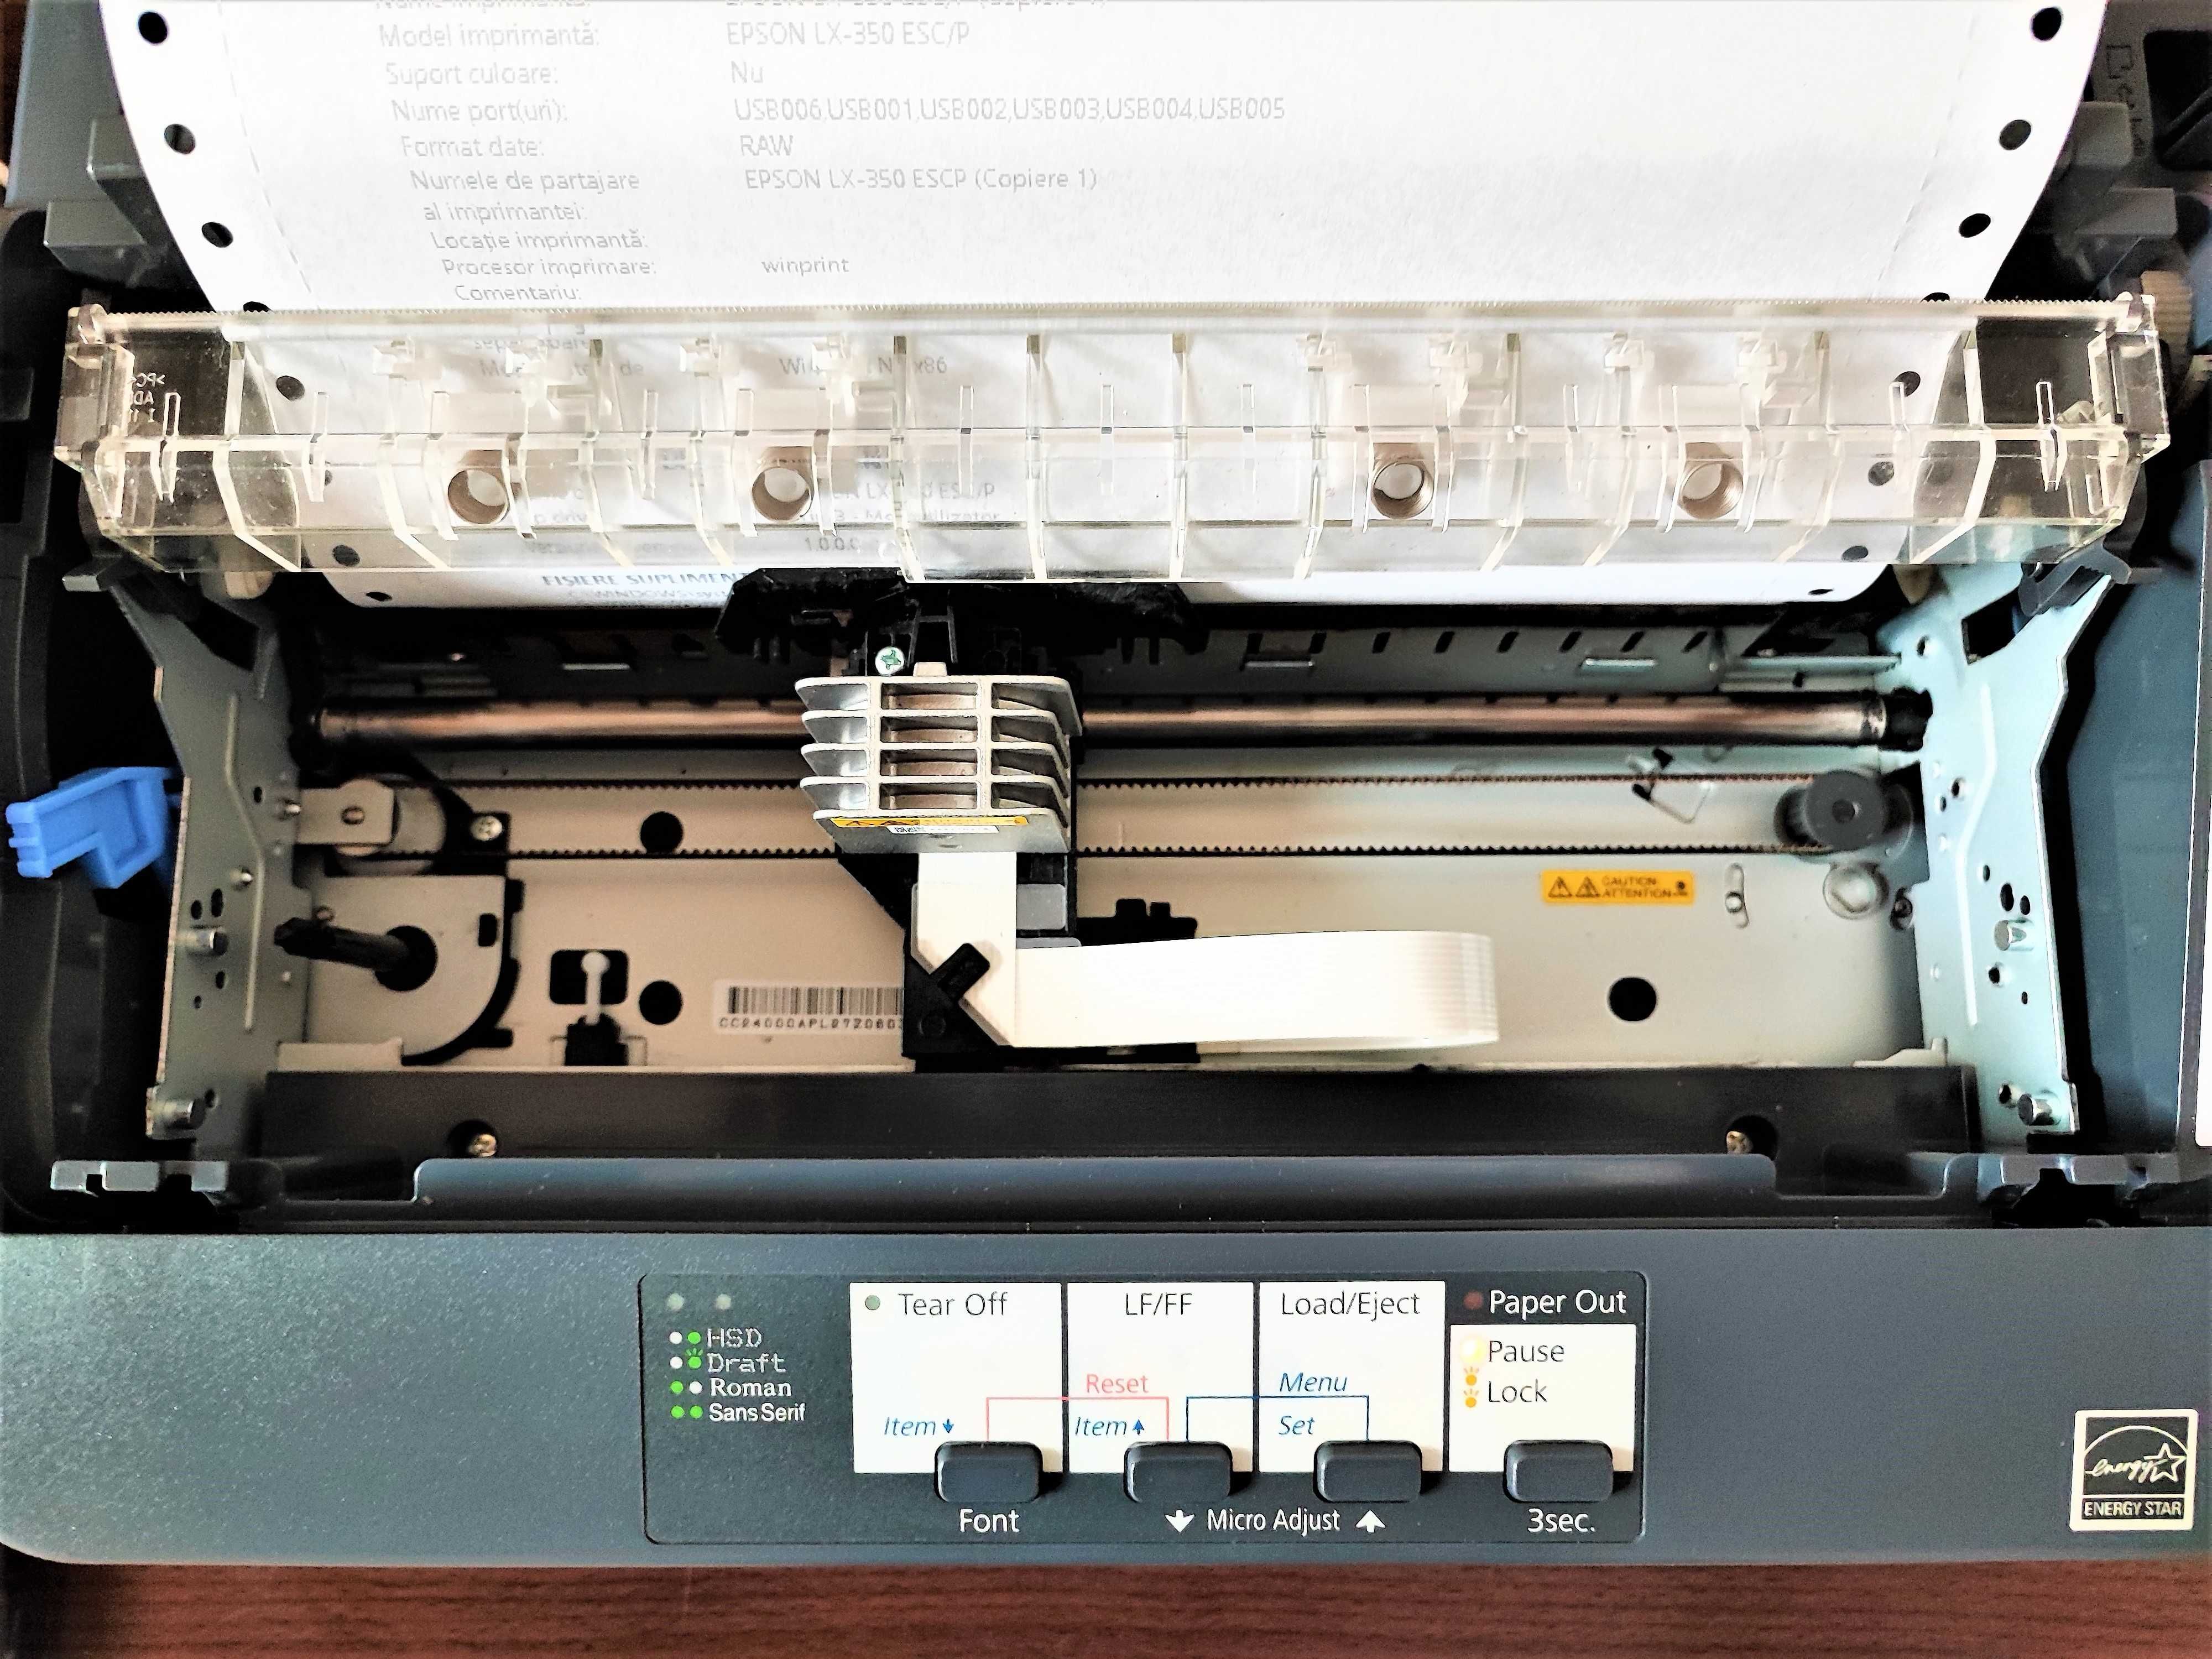 Imprimanta Epson LX350 matriciala